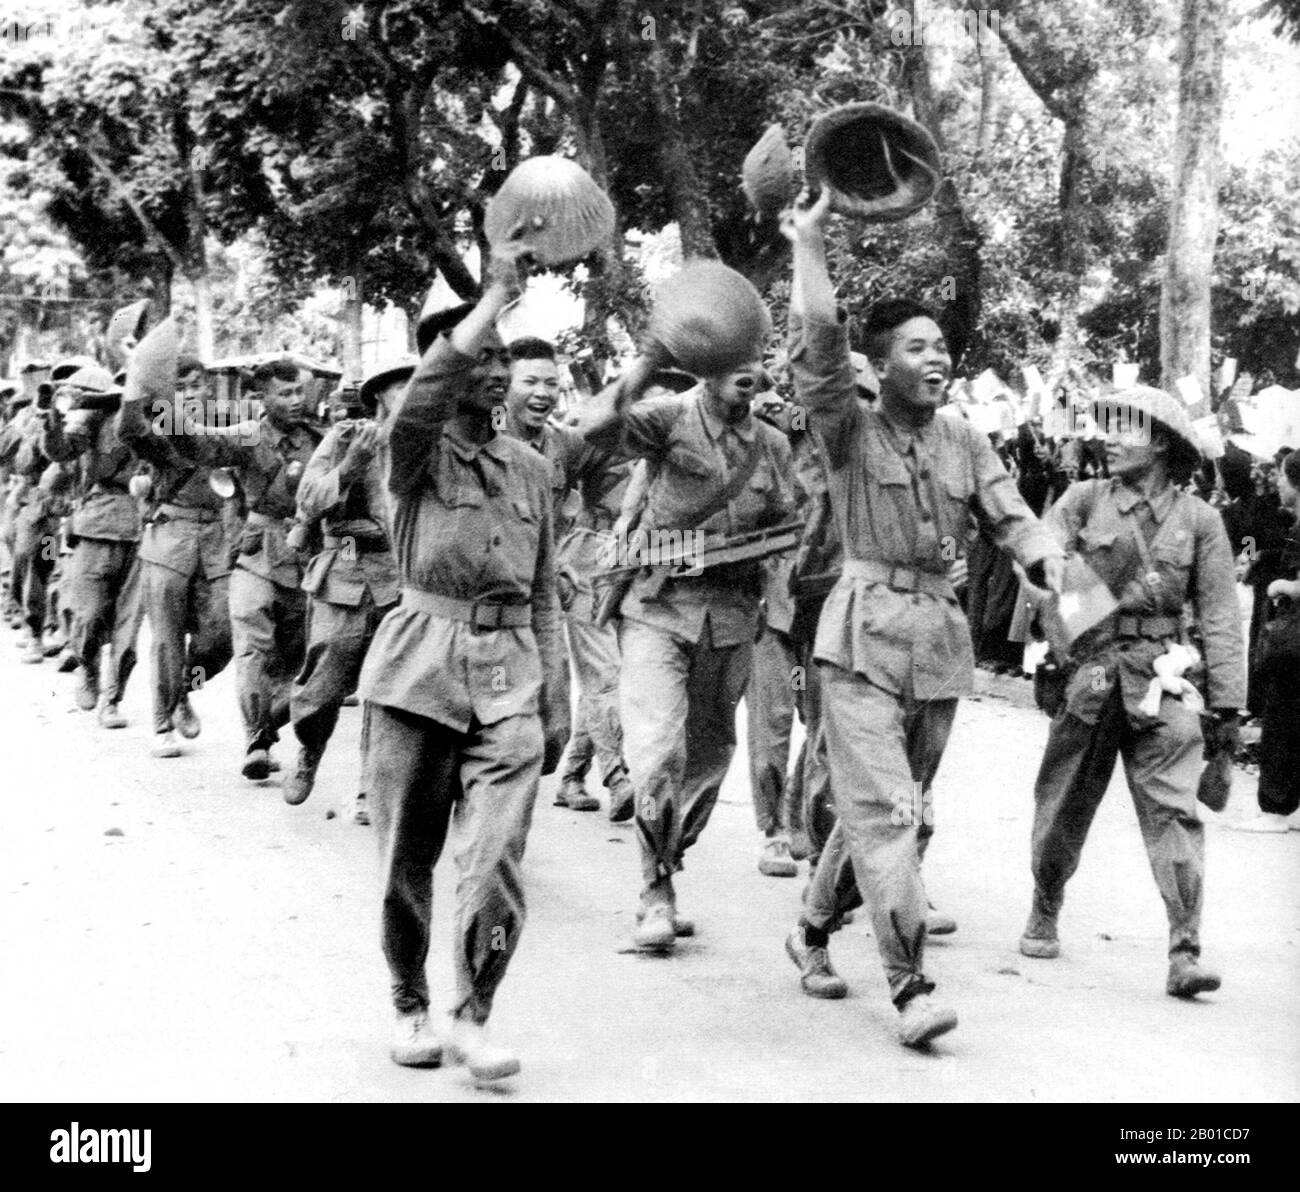 Vietnam military parade Black and White Stock Photos & Images - Alamy